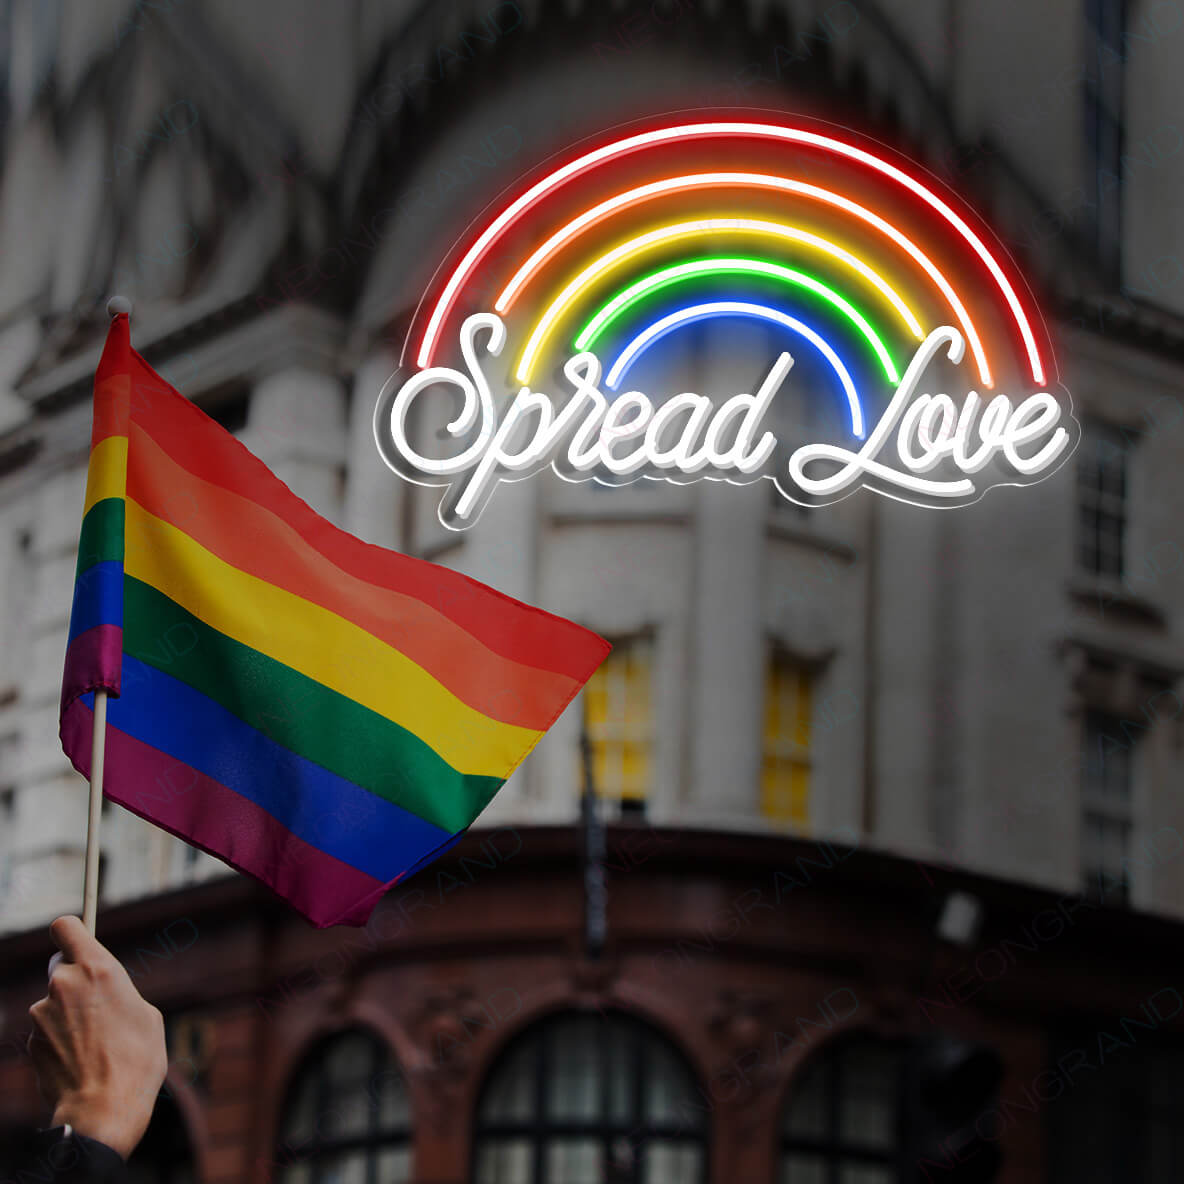 Neon Pride Signs Spread Love LGBT Neon Signs Rainbow Led Light b